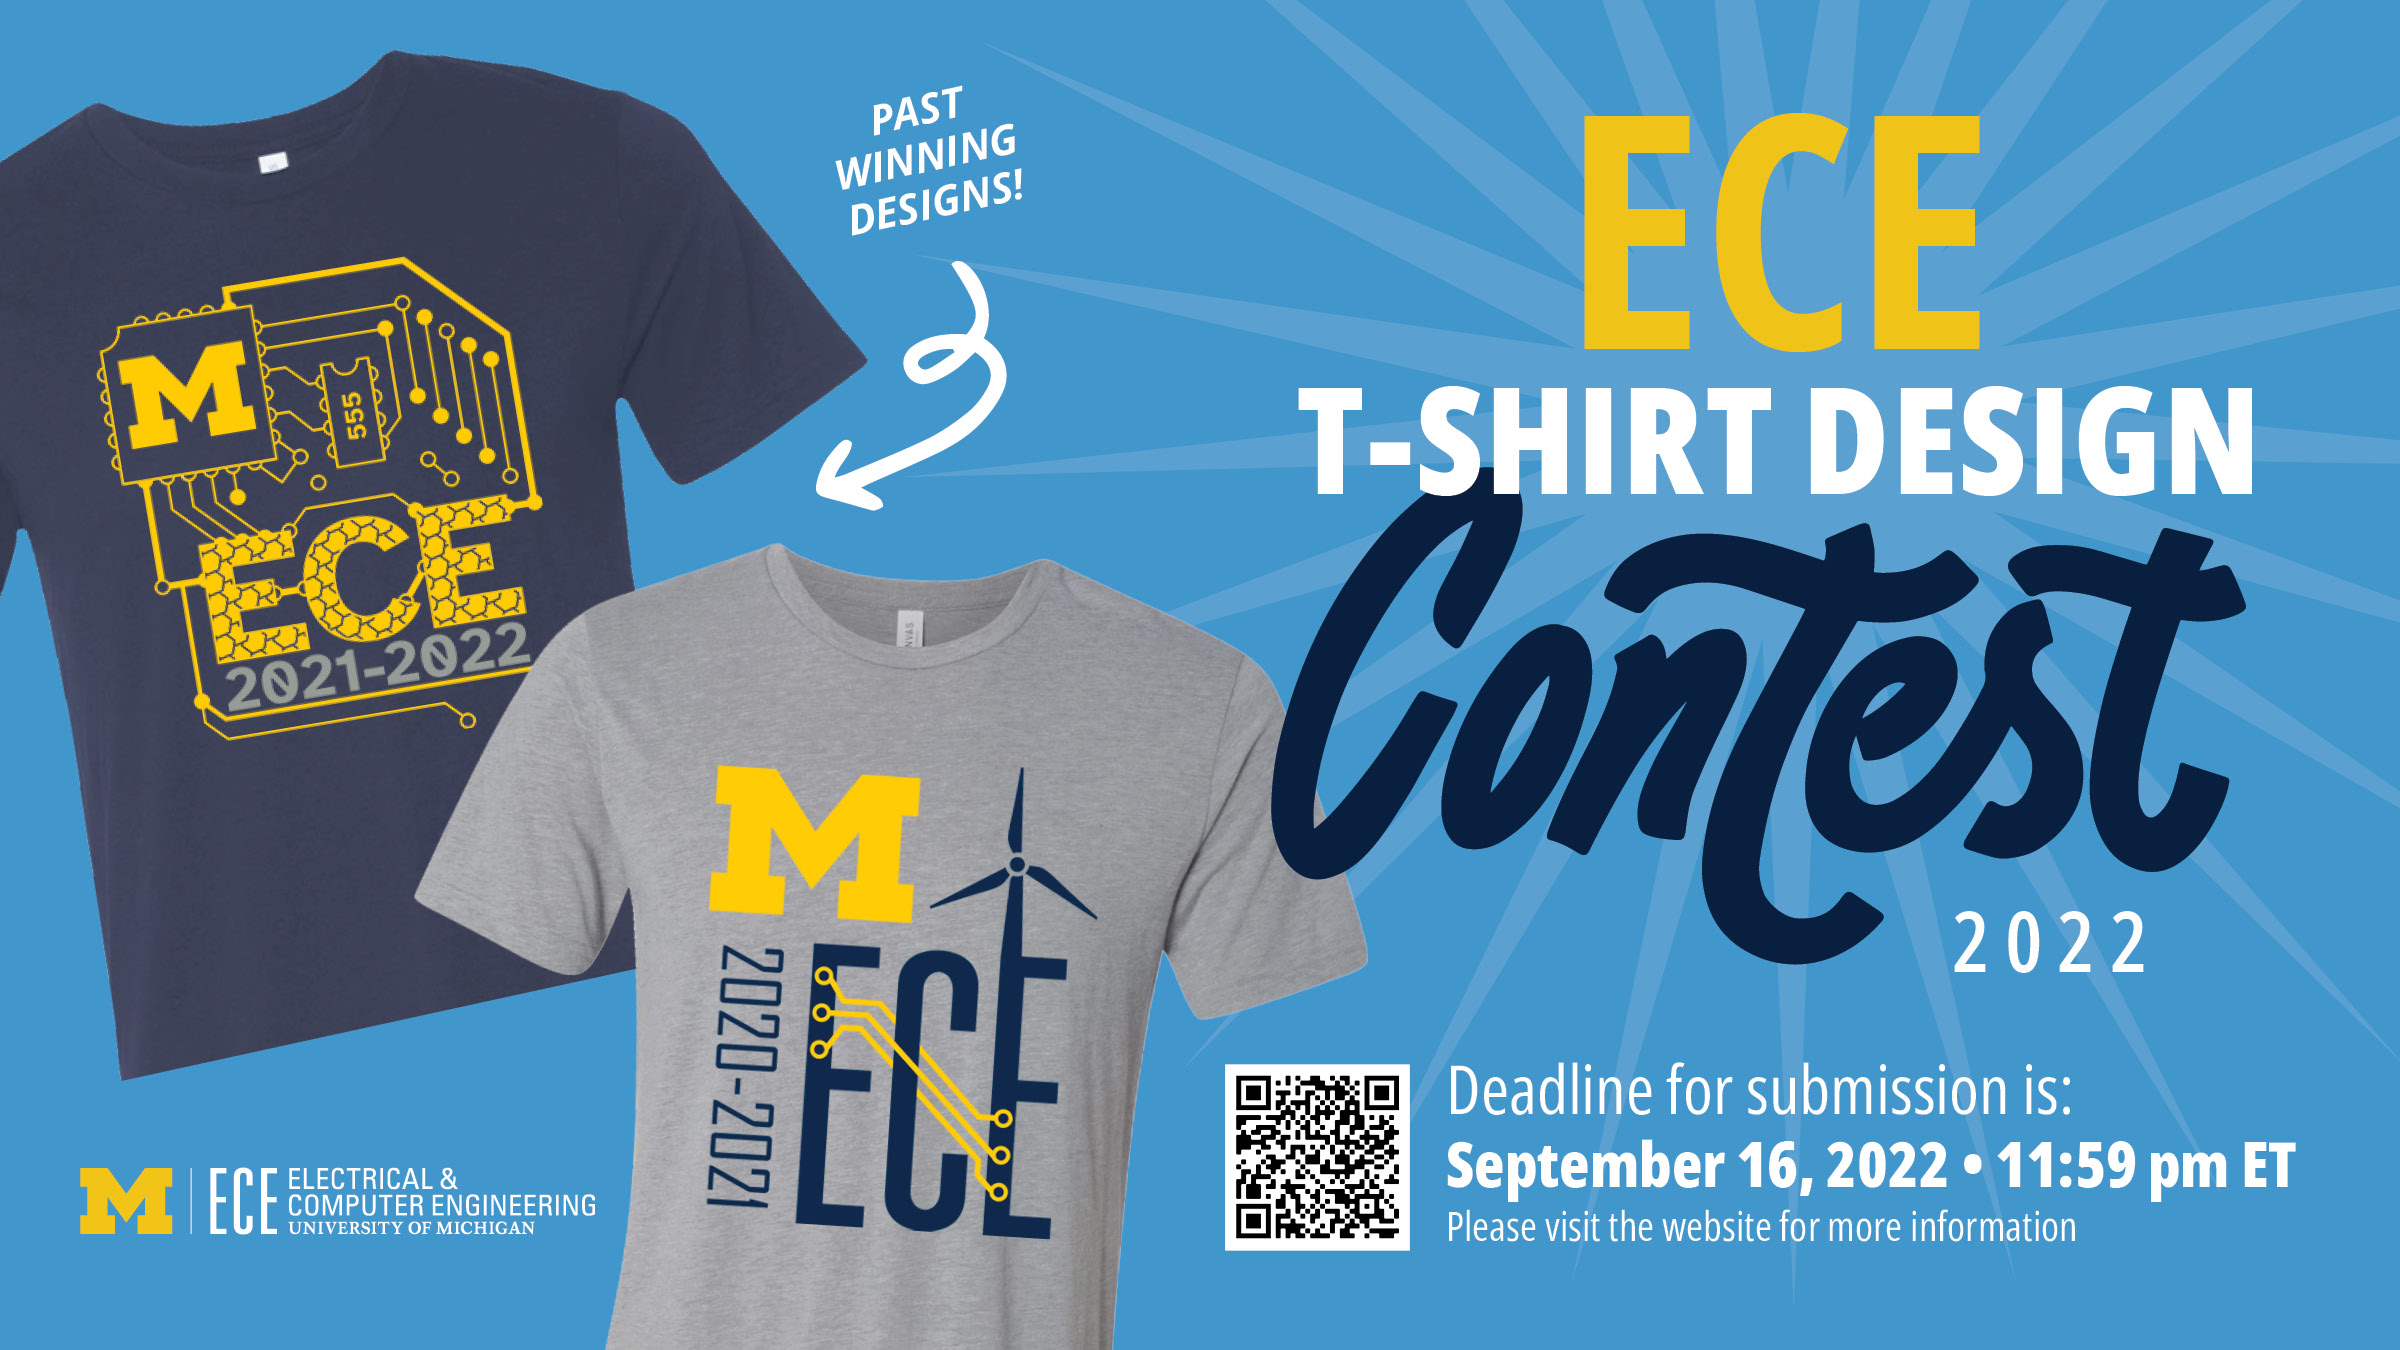 ECE T-Shirt Design Contest 2022